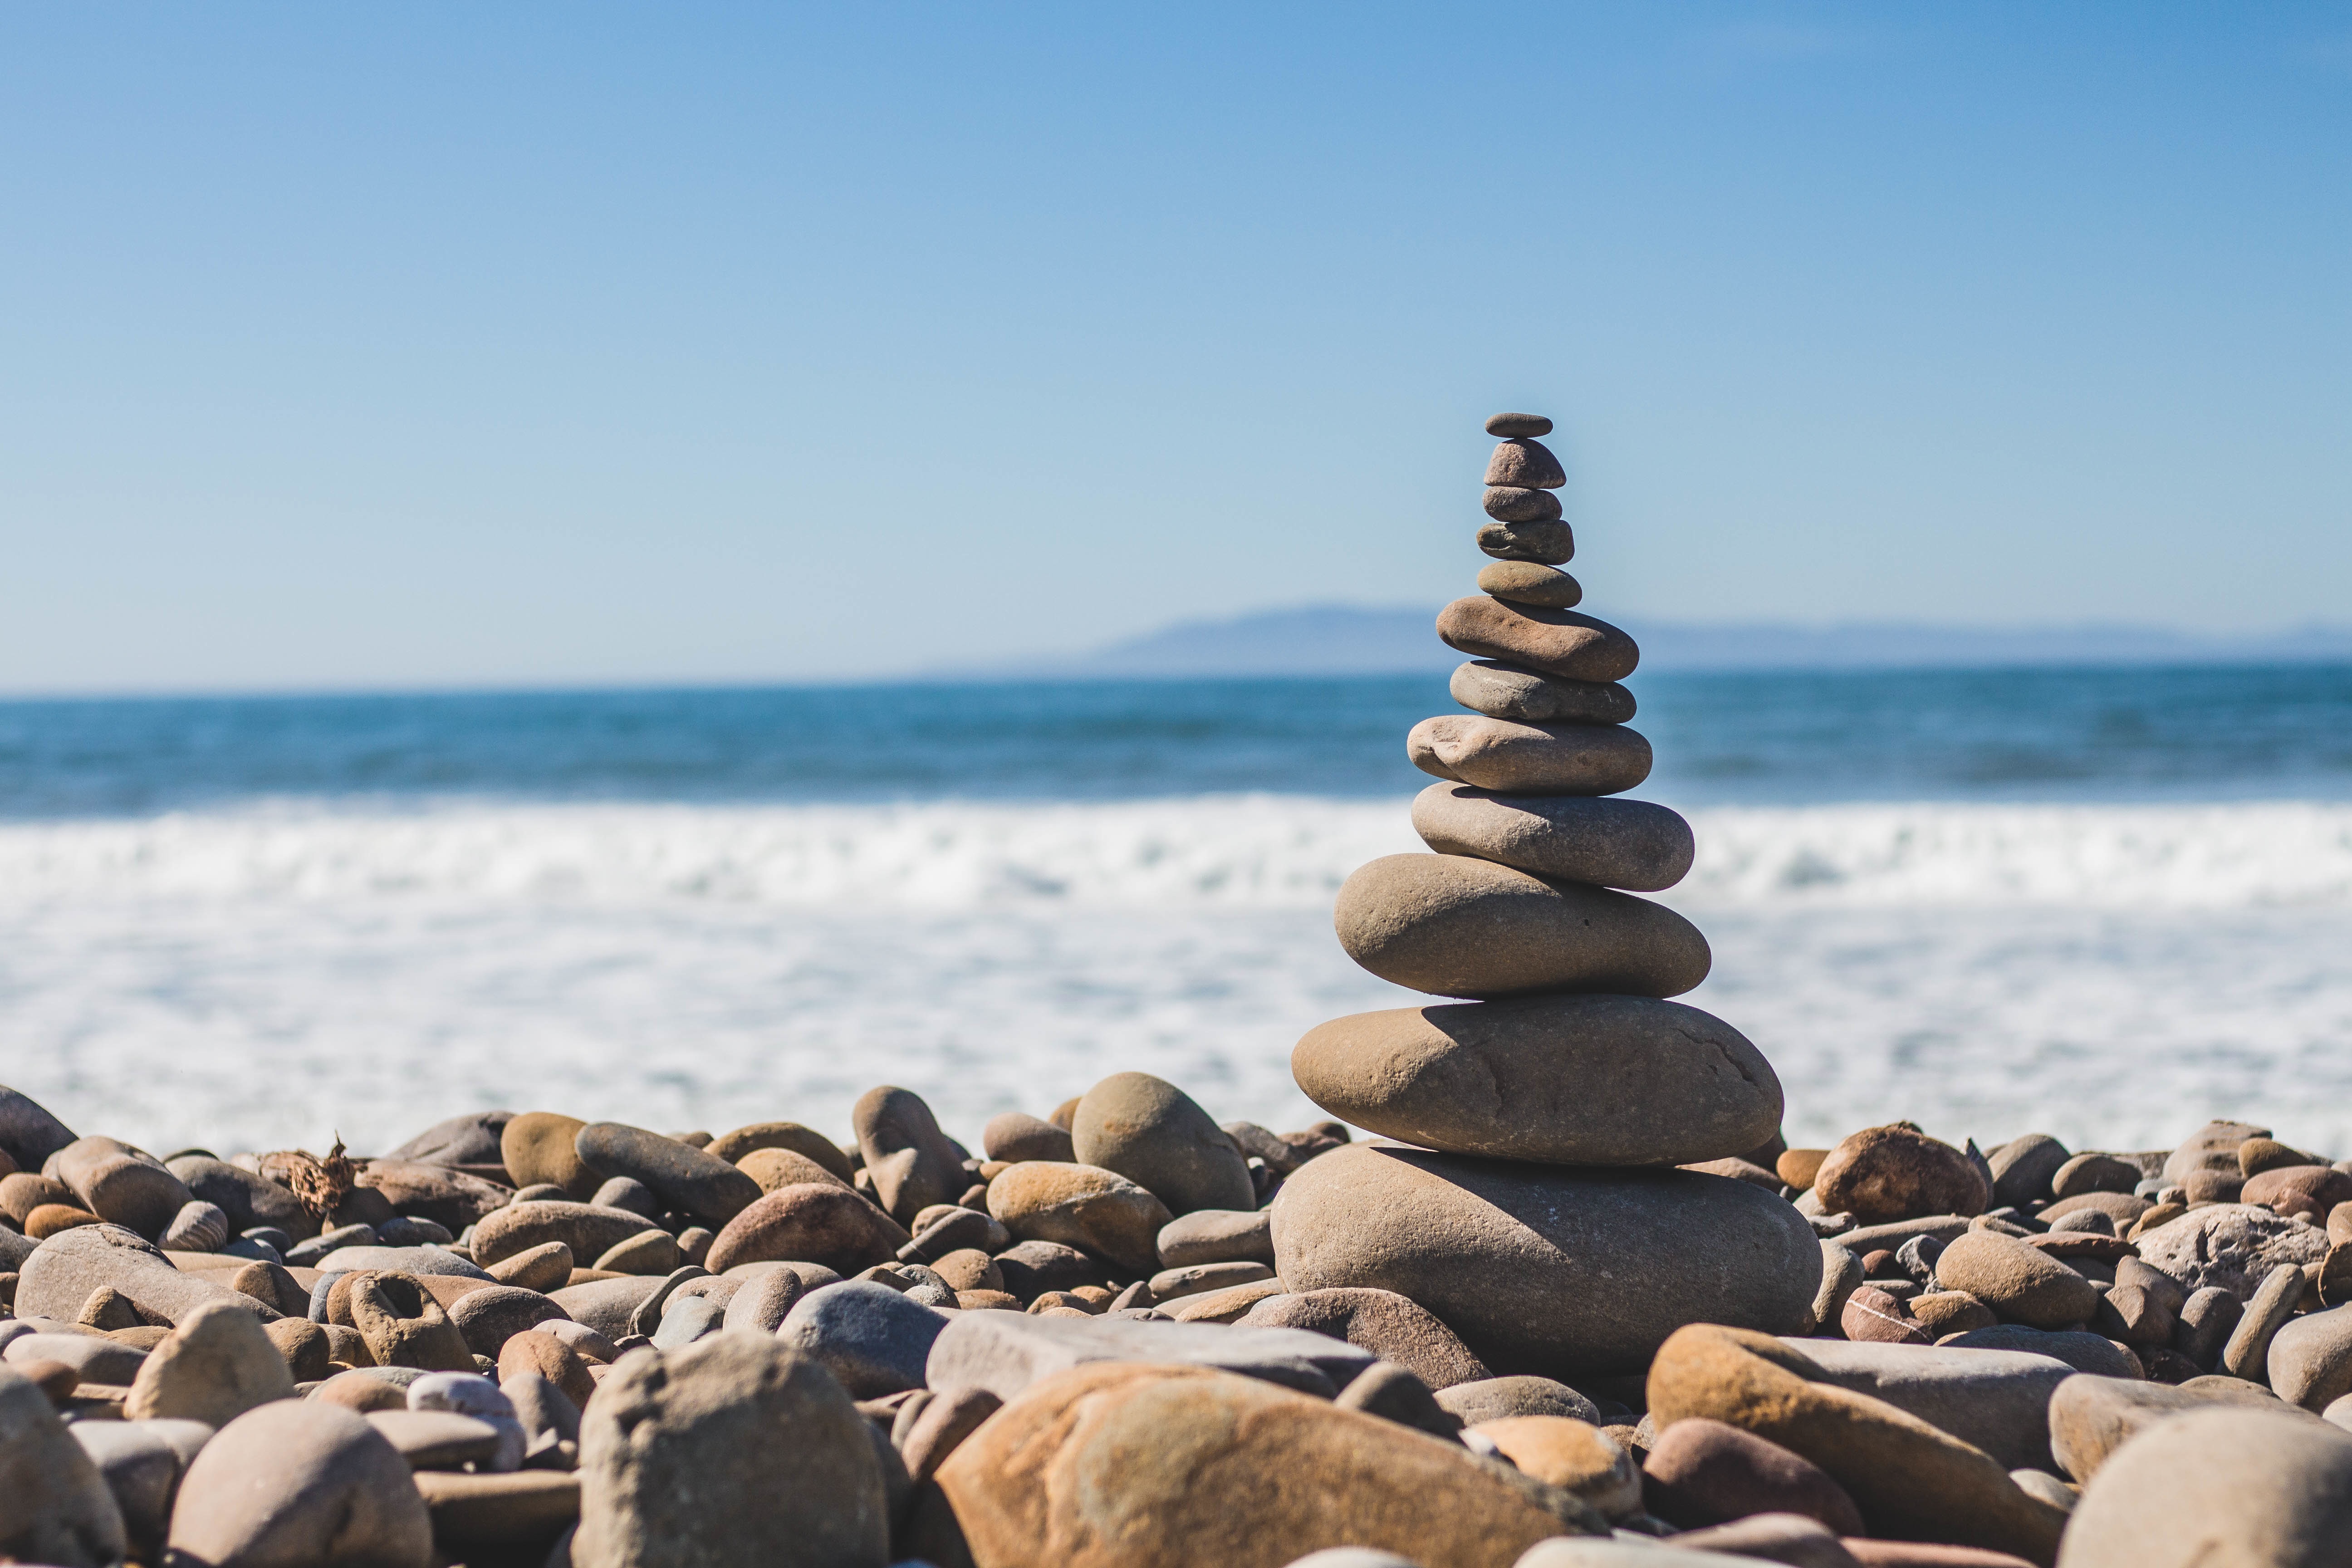 A pyramid of pebbles on the seashore